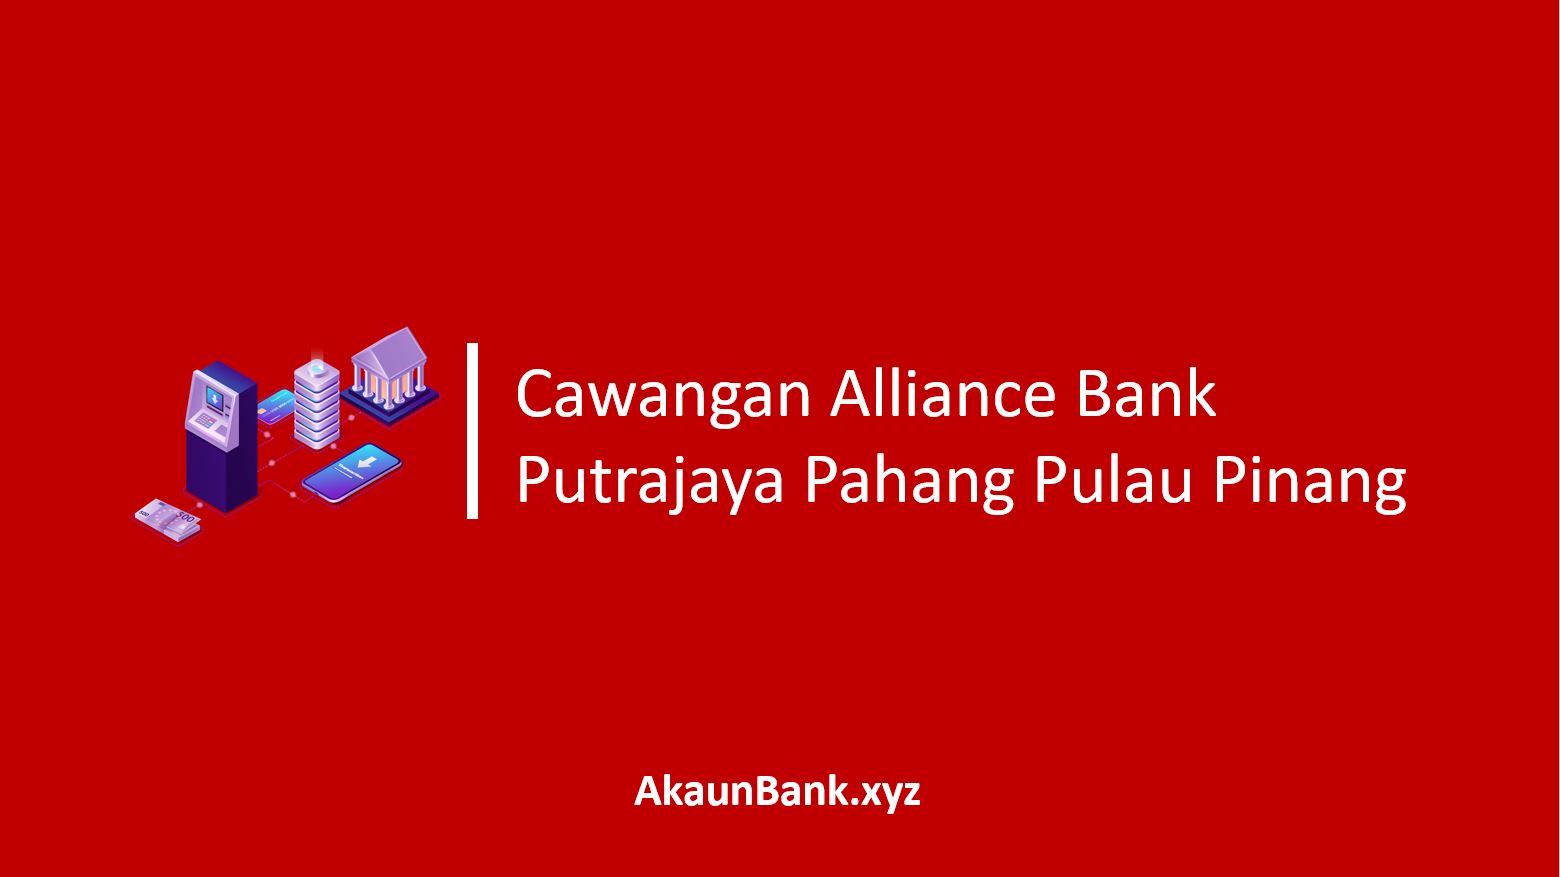 Cawangan Alliance Bank Putrajaya Pahang Pulau Pinang